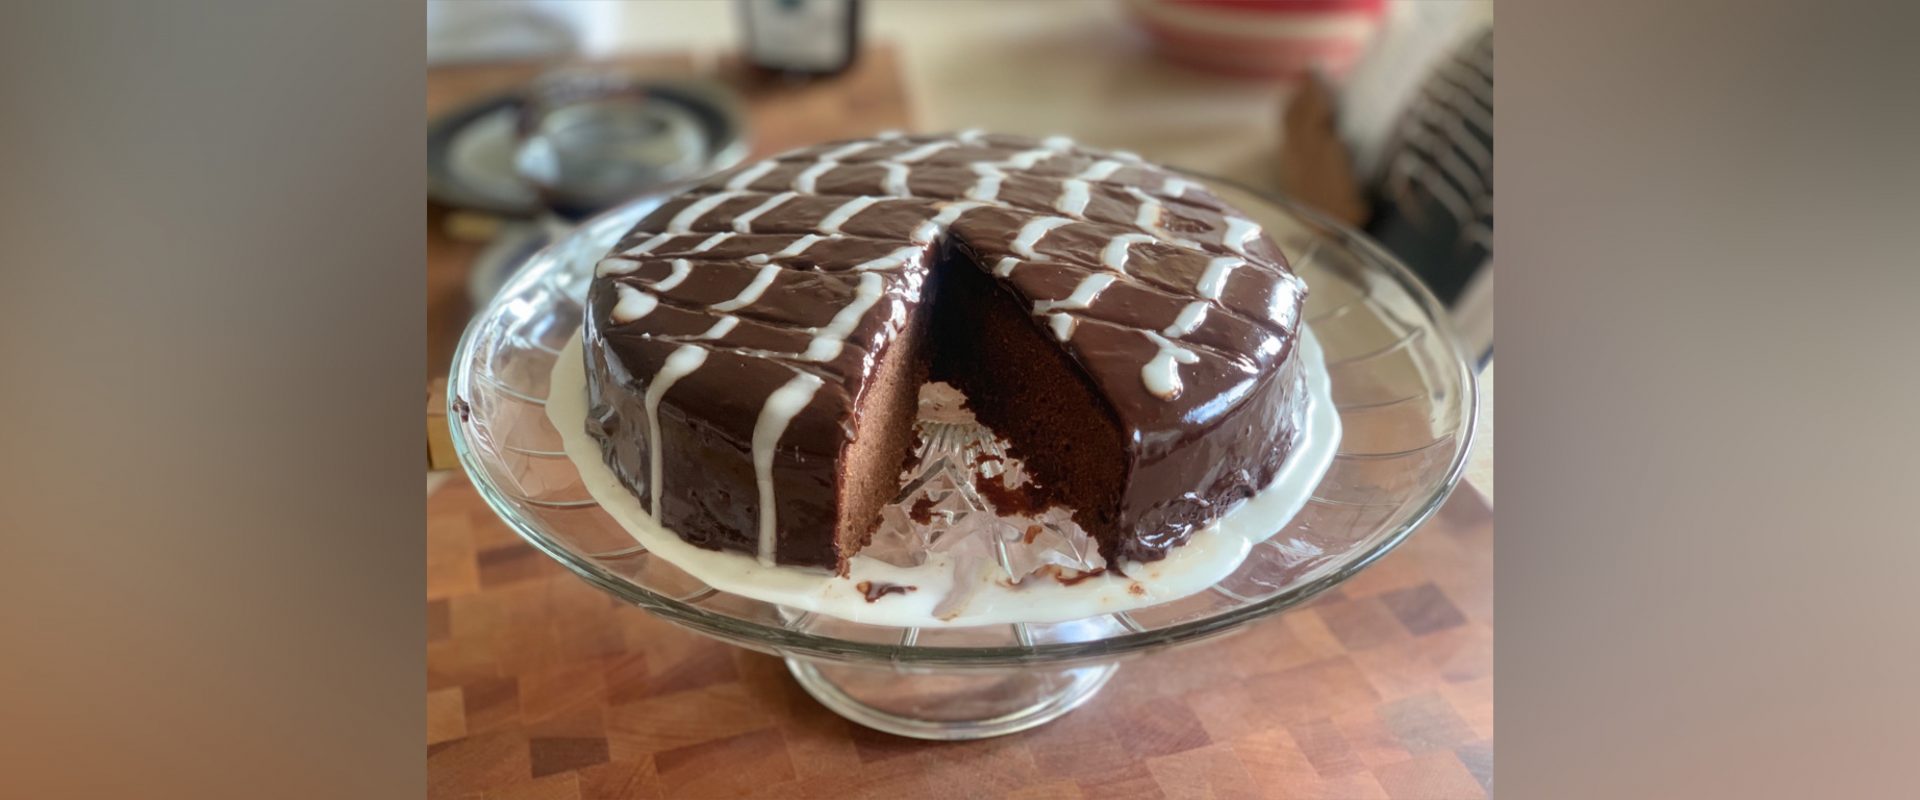 Permalink to: Chocolate Chevron Cake